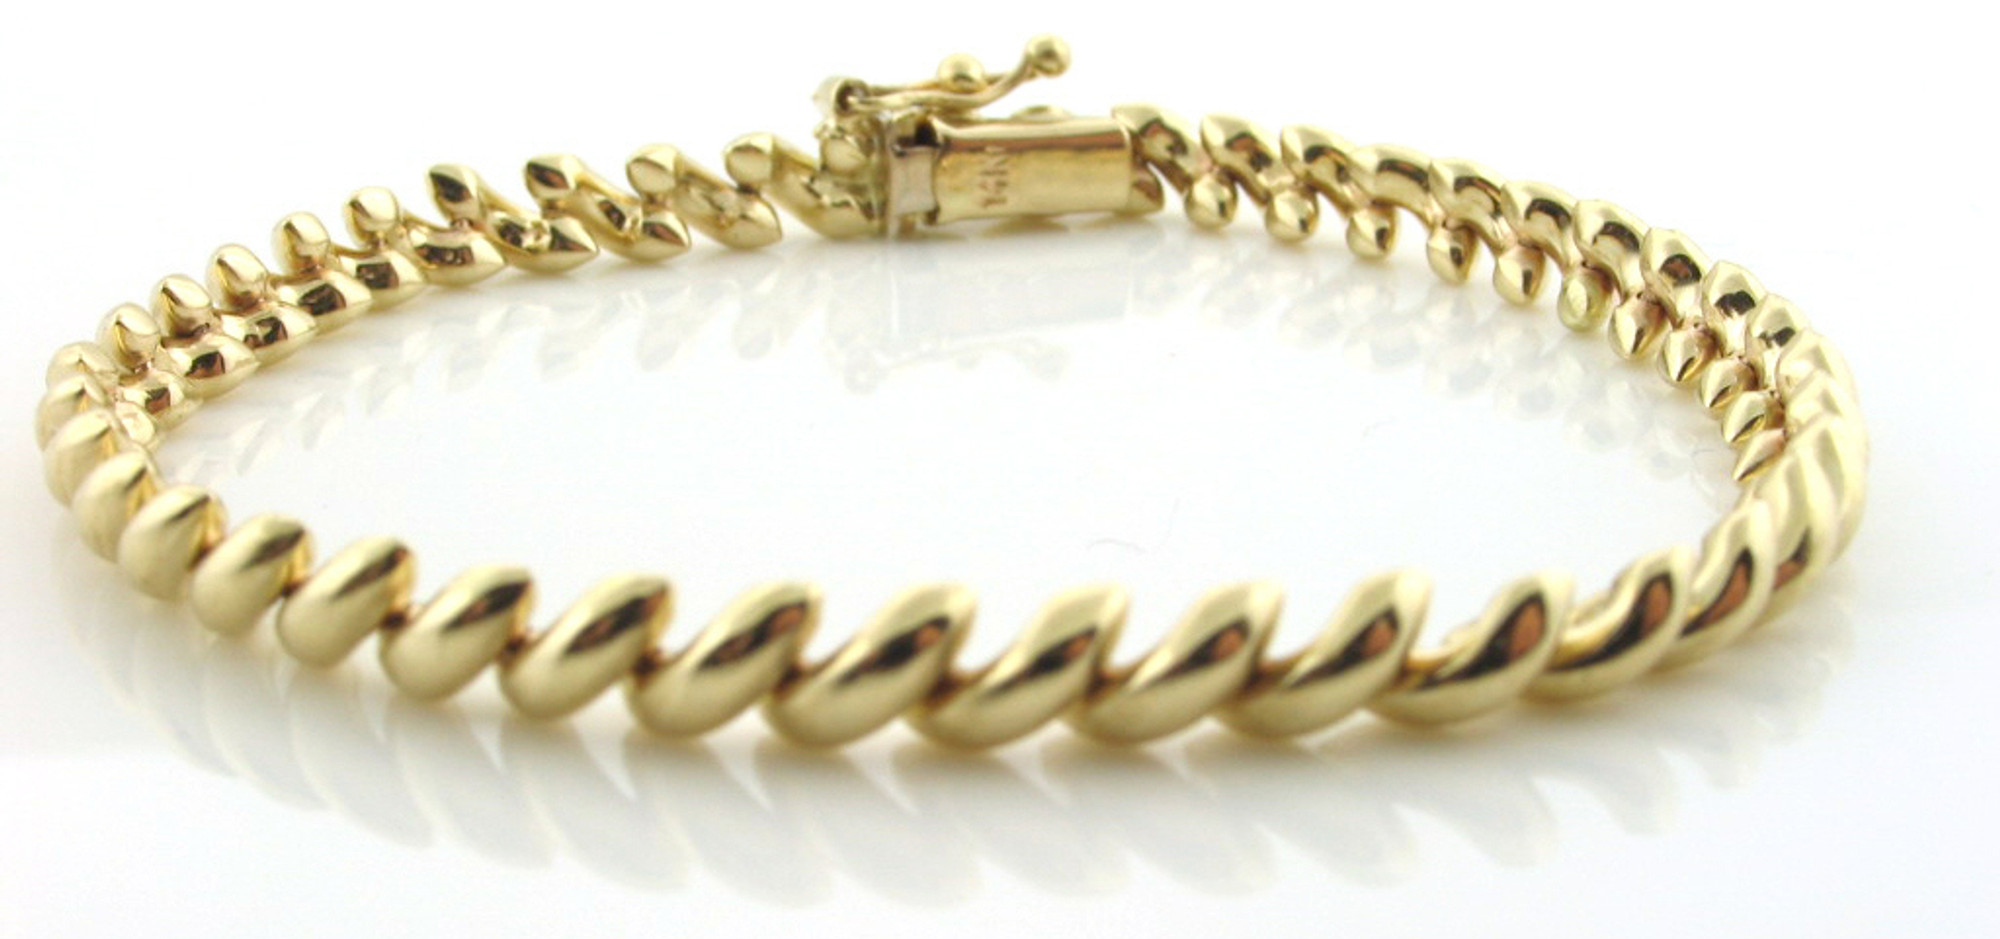 Rose Gold Bracelet | S.Vaggi Online Jewelry Store – Gioielleria S.Vaggi